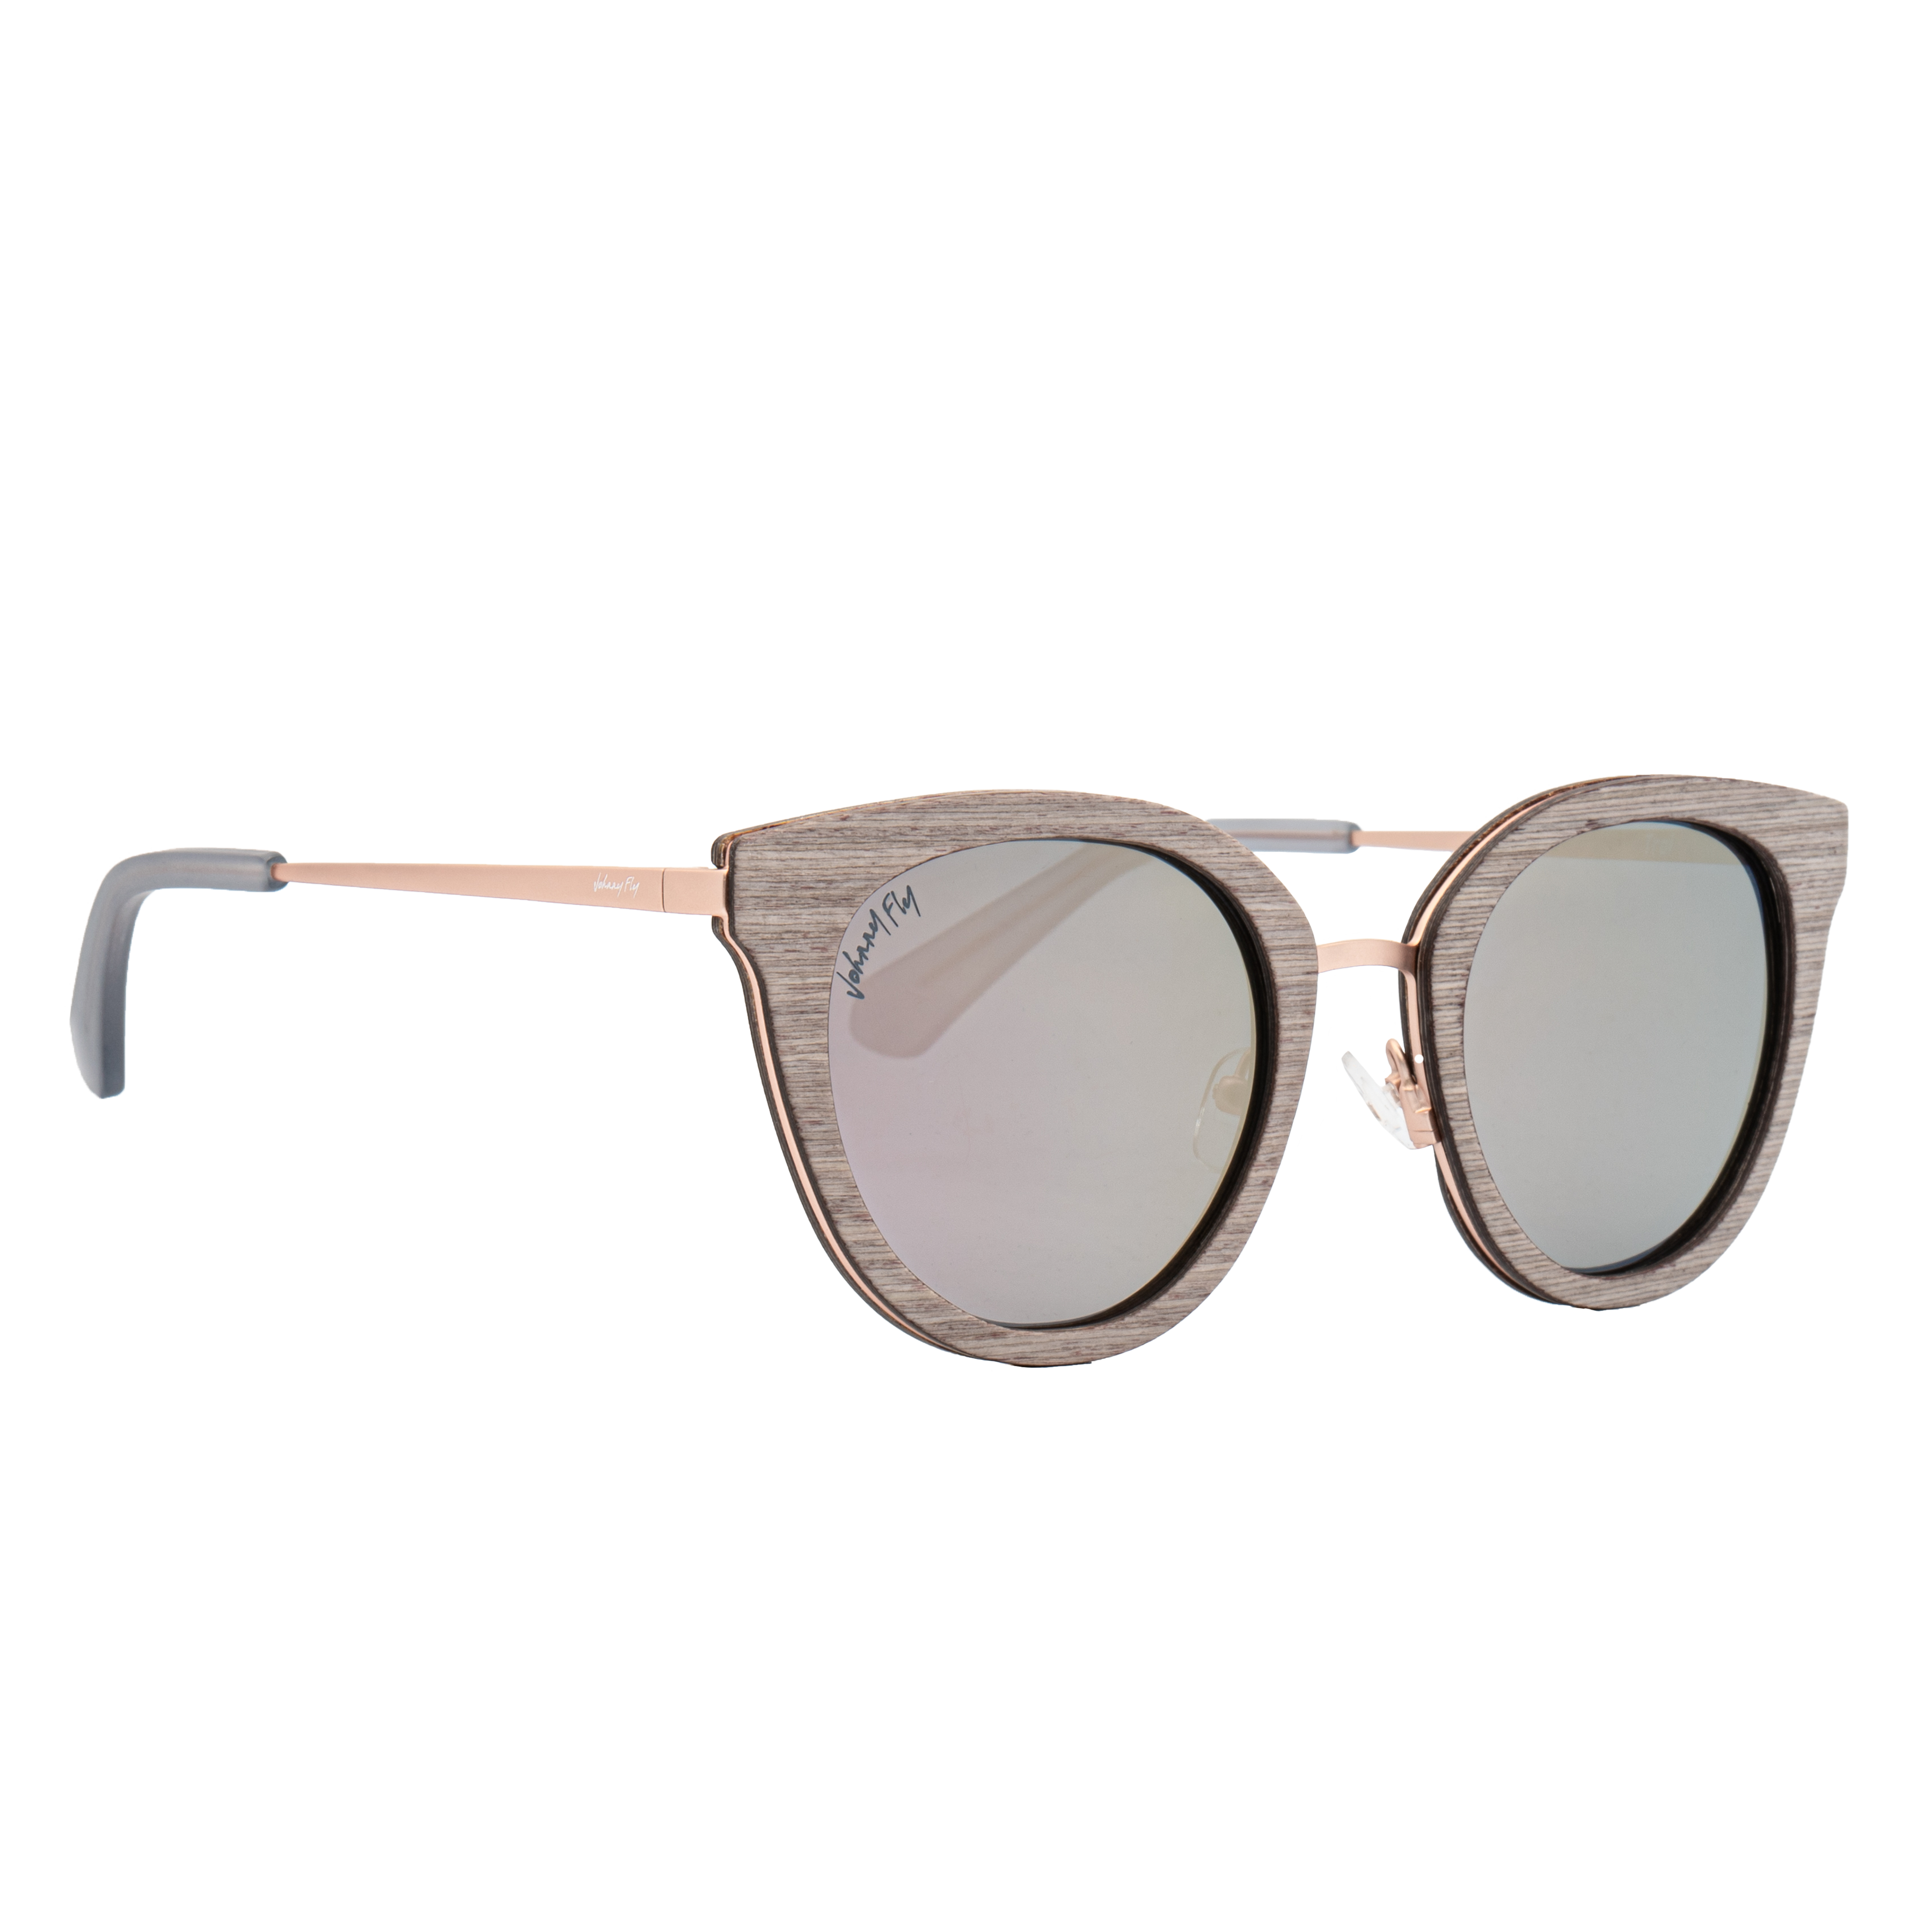 TROI - Rose Gold - Sunglasses - Johnny Fly Eyewear 